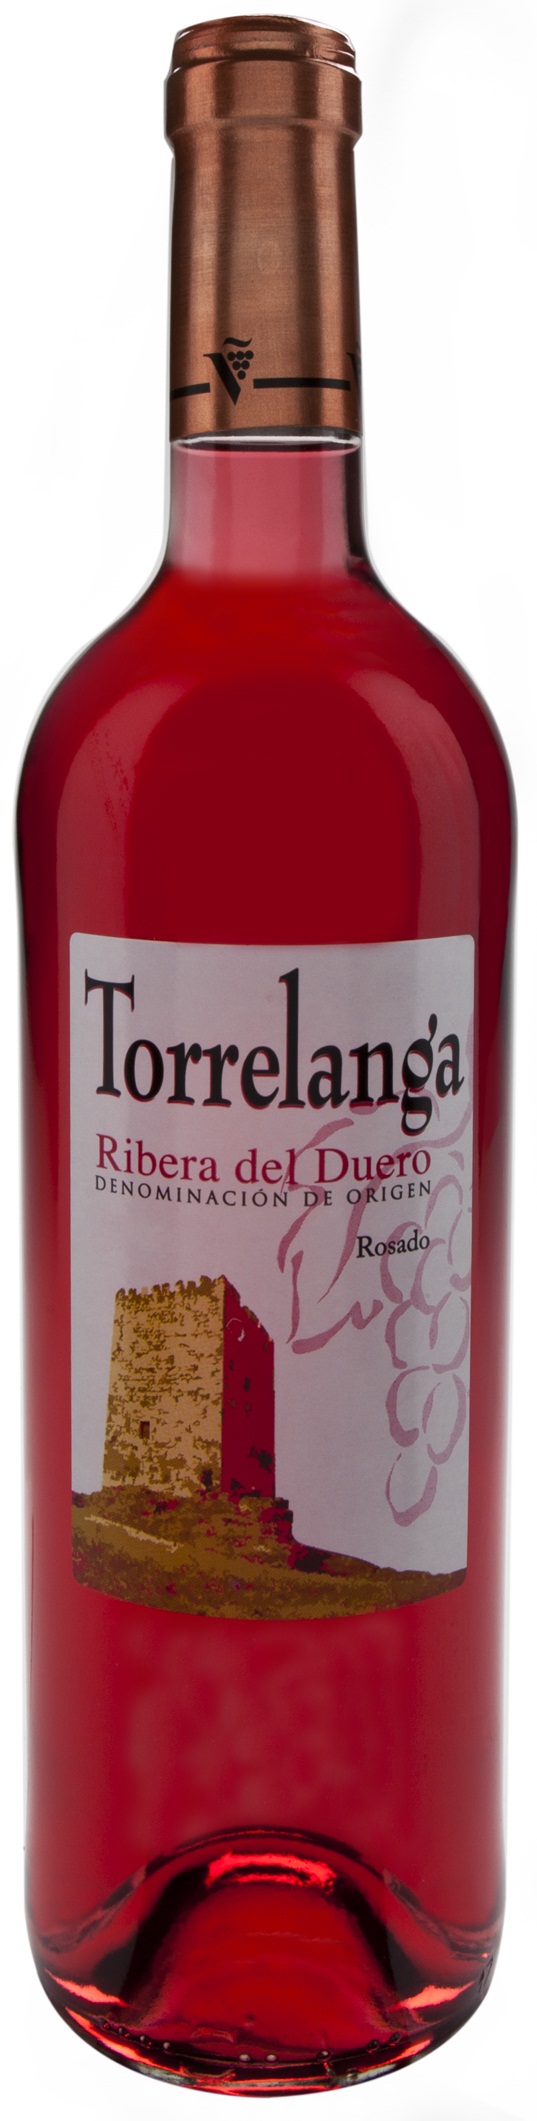 Logo del vino Torrelanga Rosado 2011